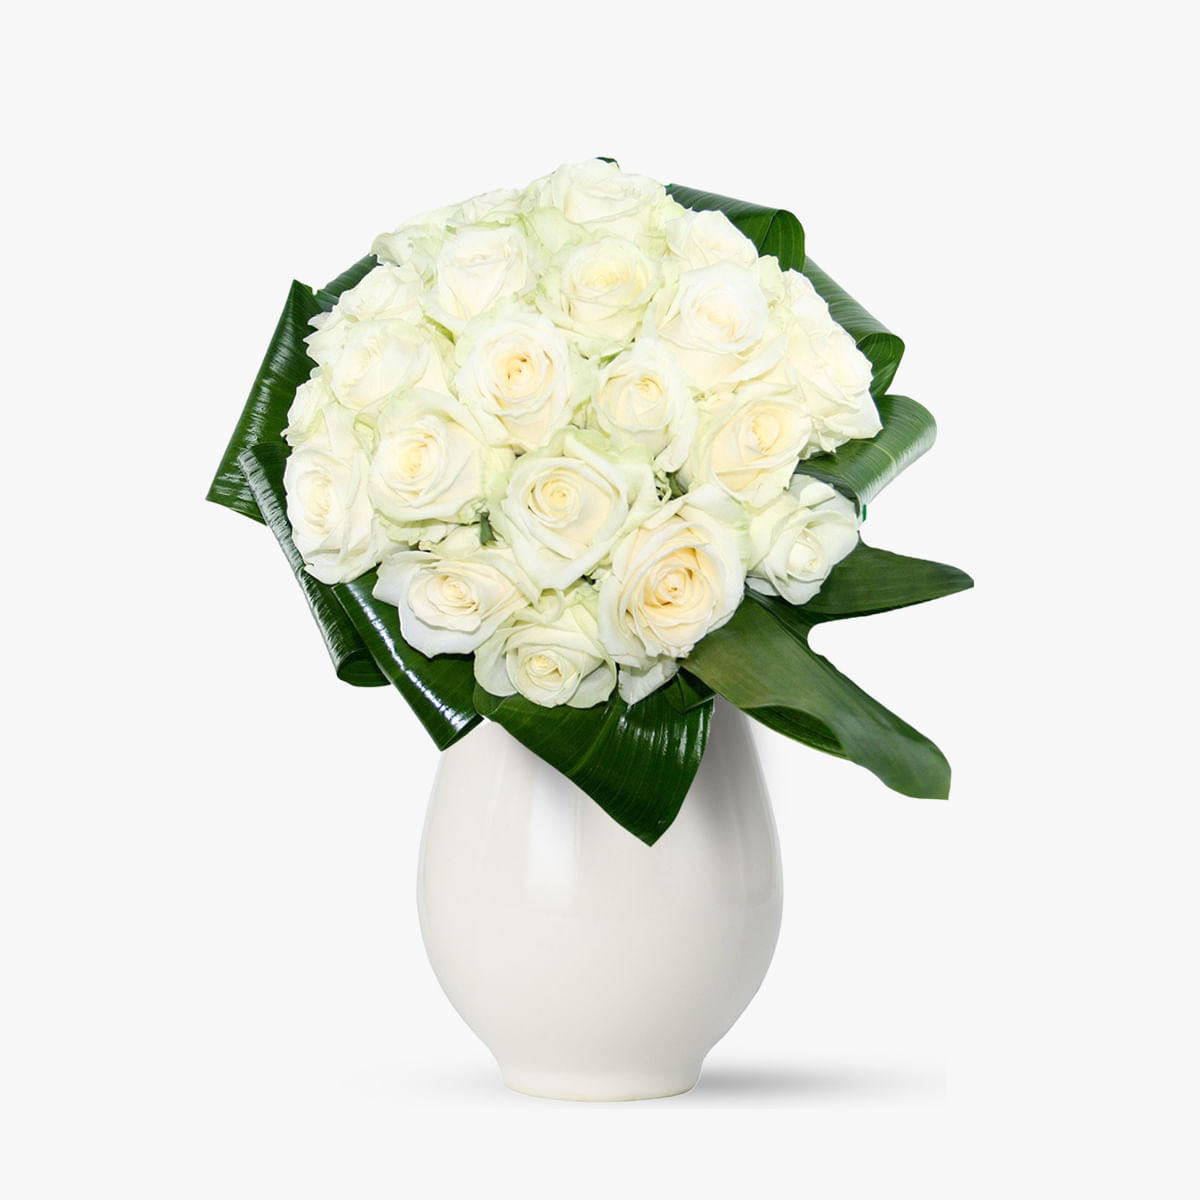 Buchet de 25 trandafiri albi floria.ro